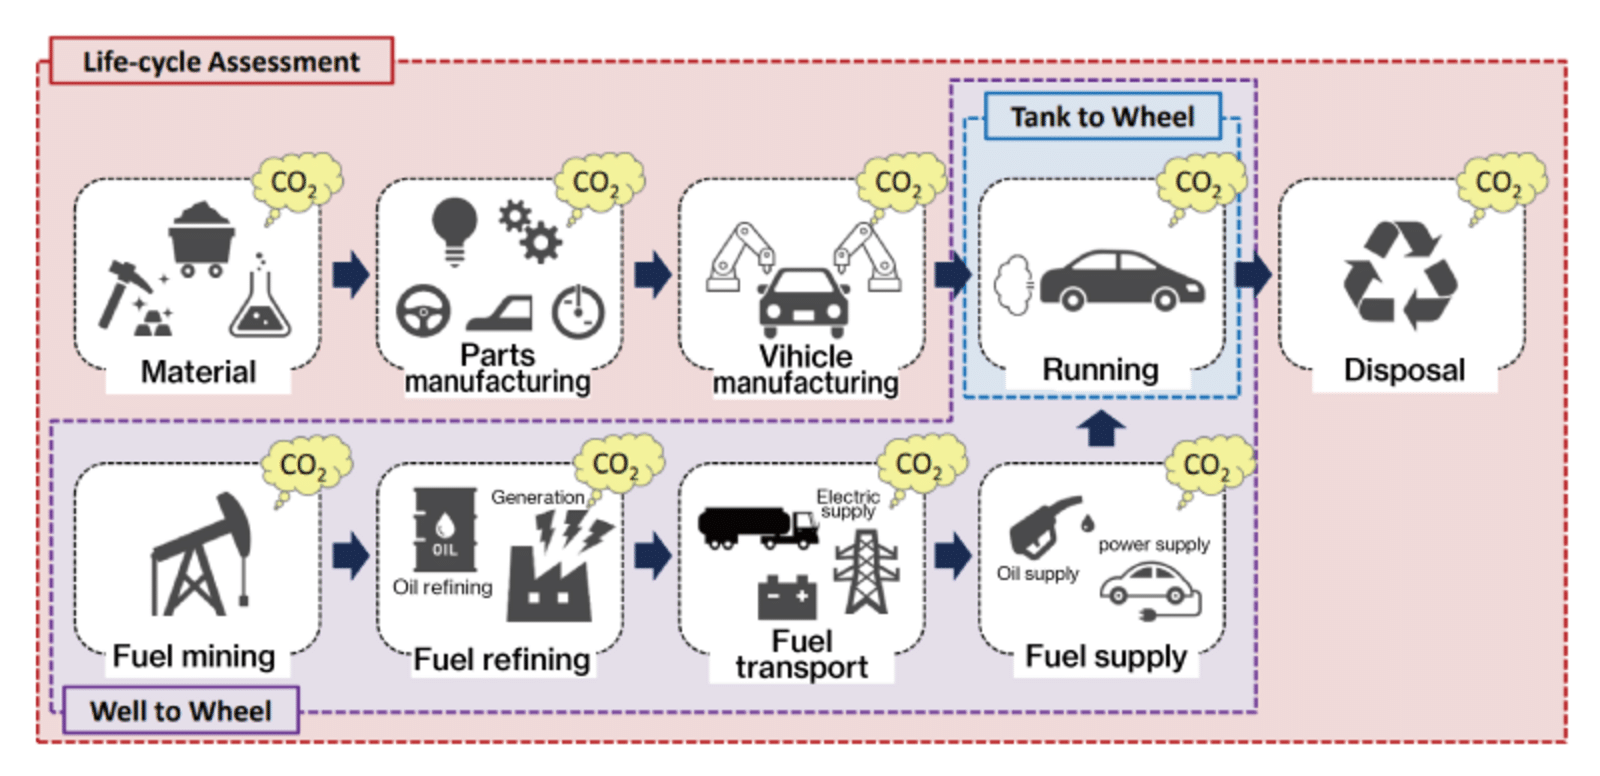 ऑटोमोबाइल के लिए एलसीए उदाहरण स्कोप 3 उत्सर्जन